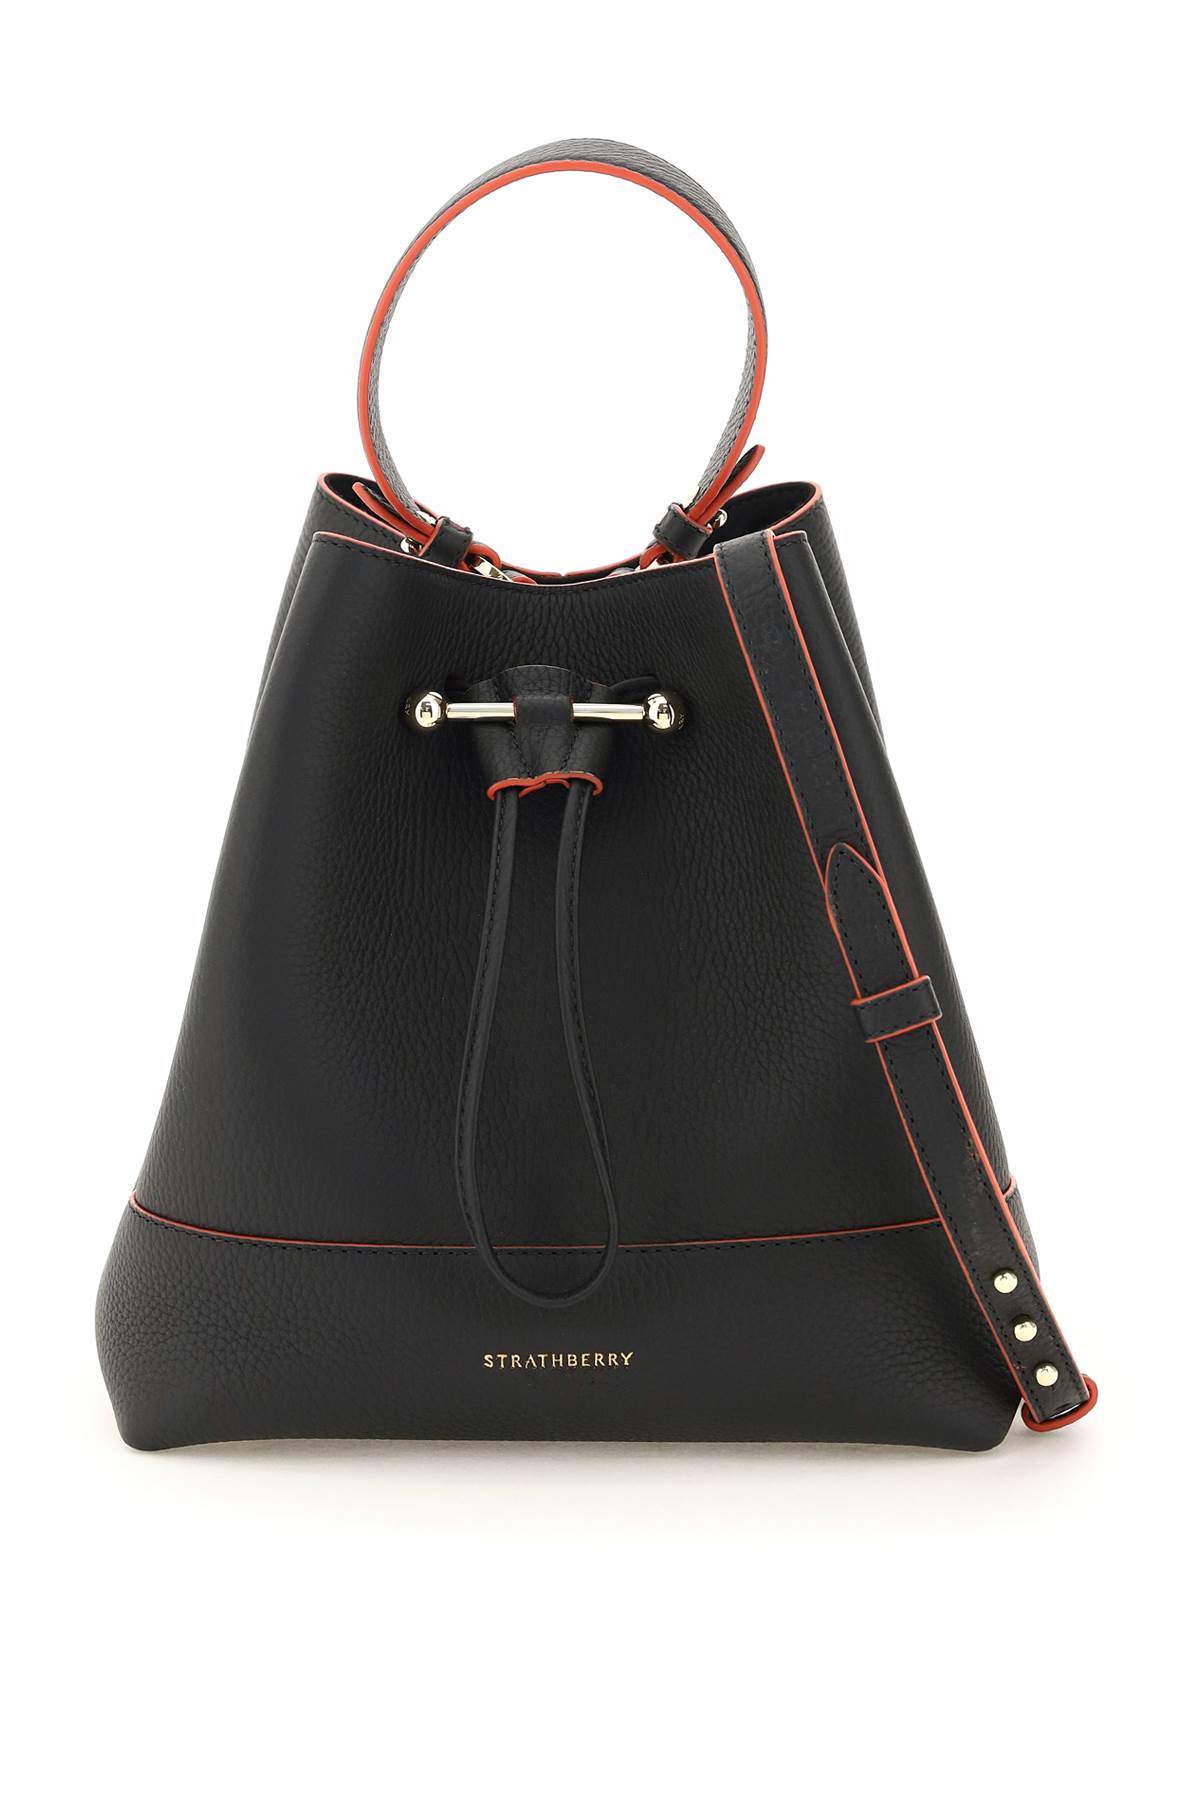 Strathberry Lana Osette Midi Leather Bucket Bag on SALE